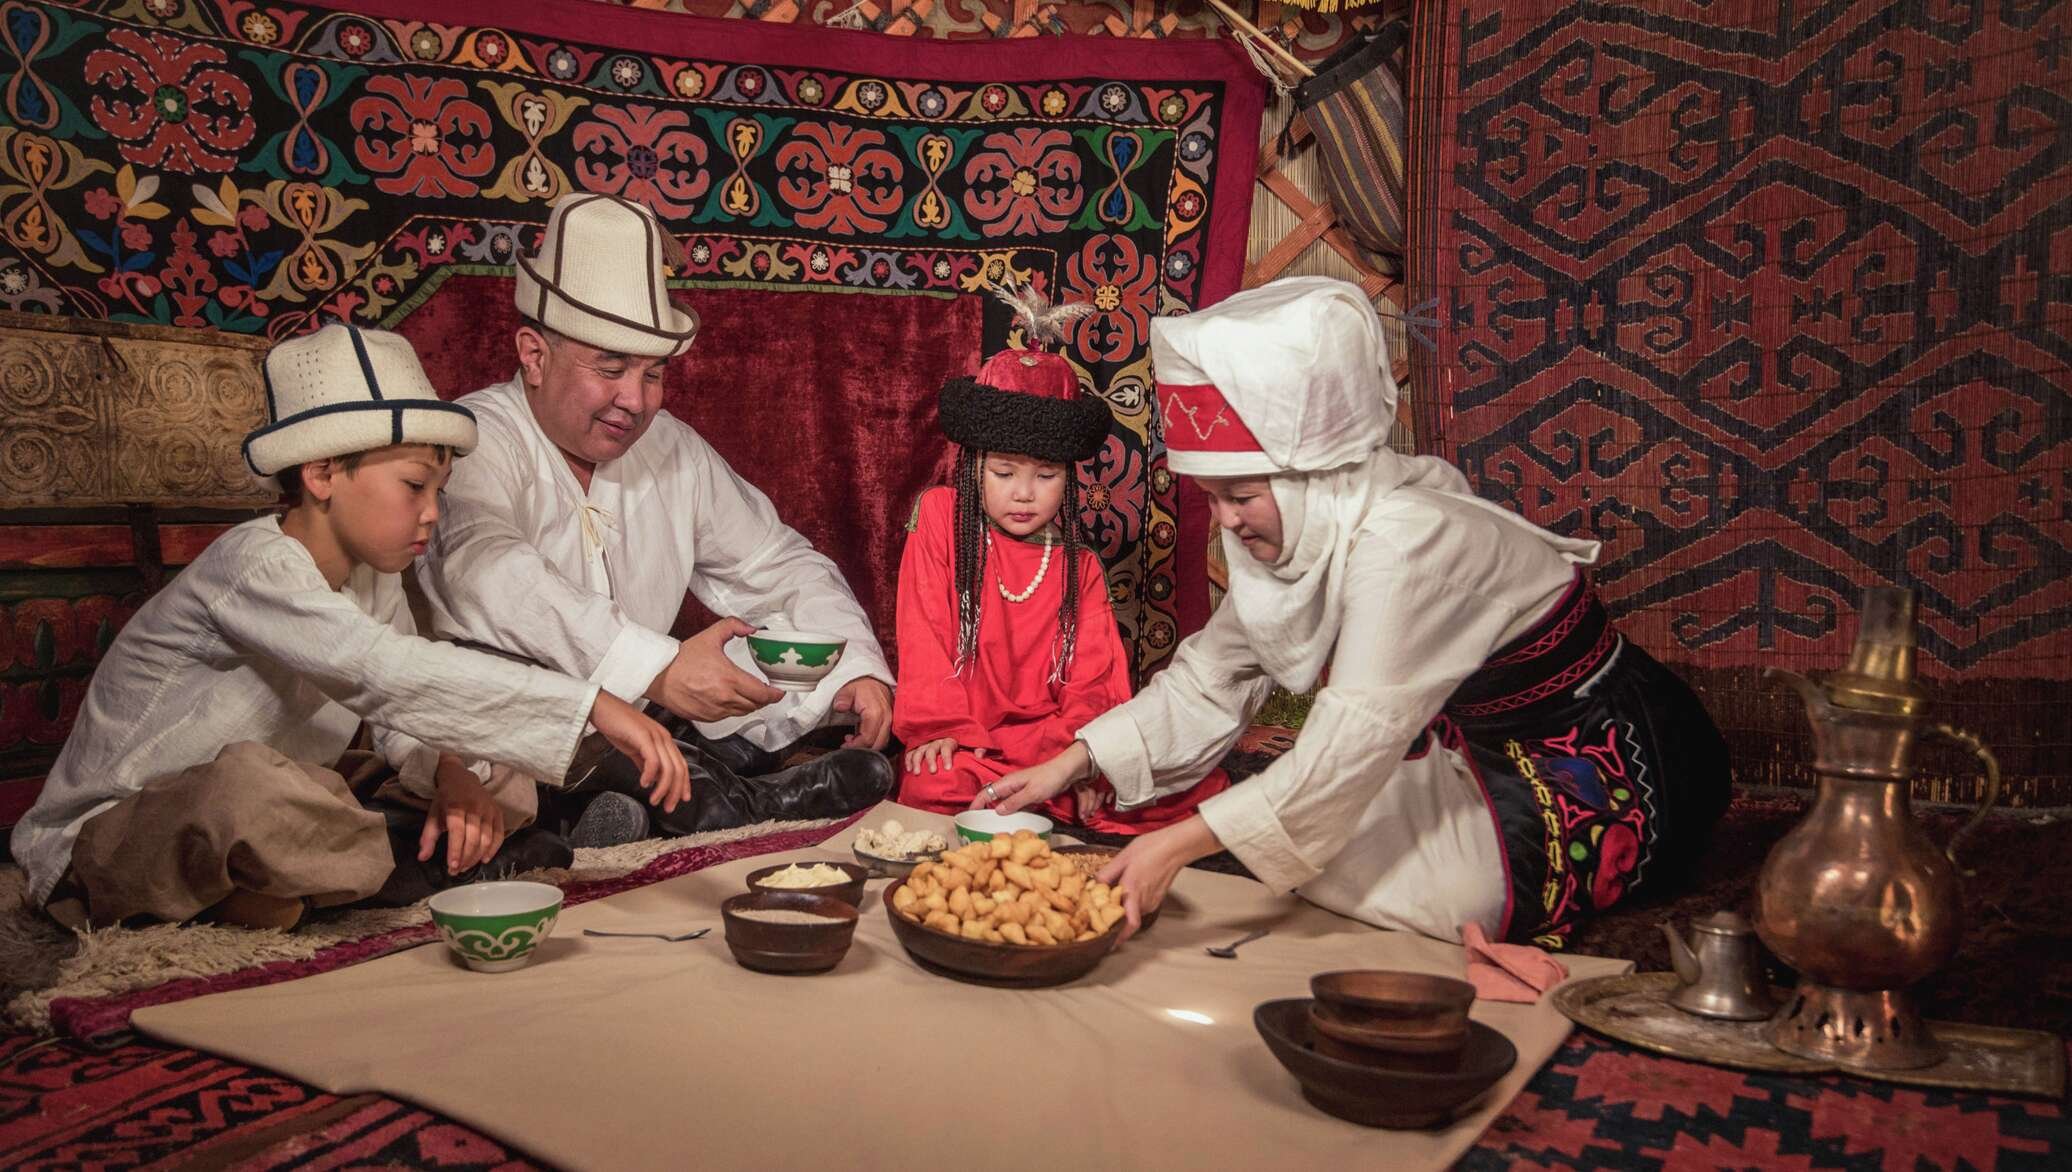 Kazakh me. Кыргызская семья в Юрте. Казахская юрта Национальная одежда казахов. Семейные традиции казахского народа. Кыргызские национальные традиции.